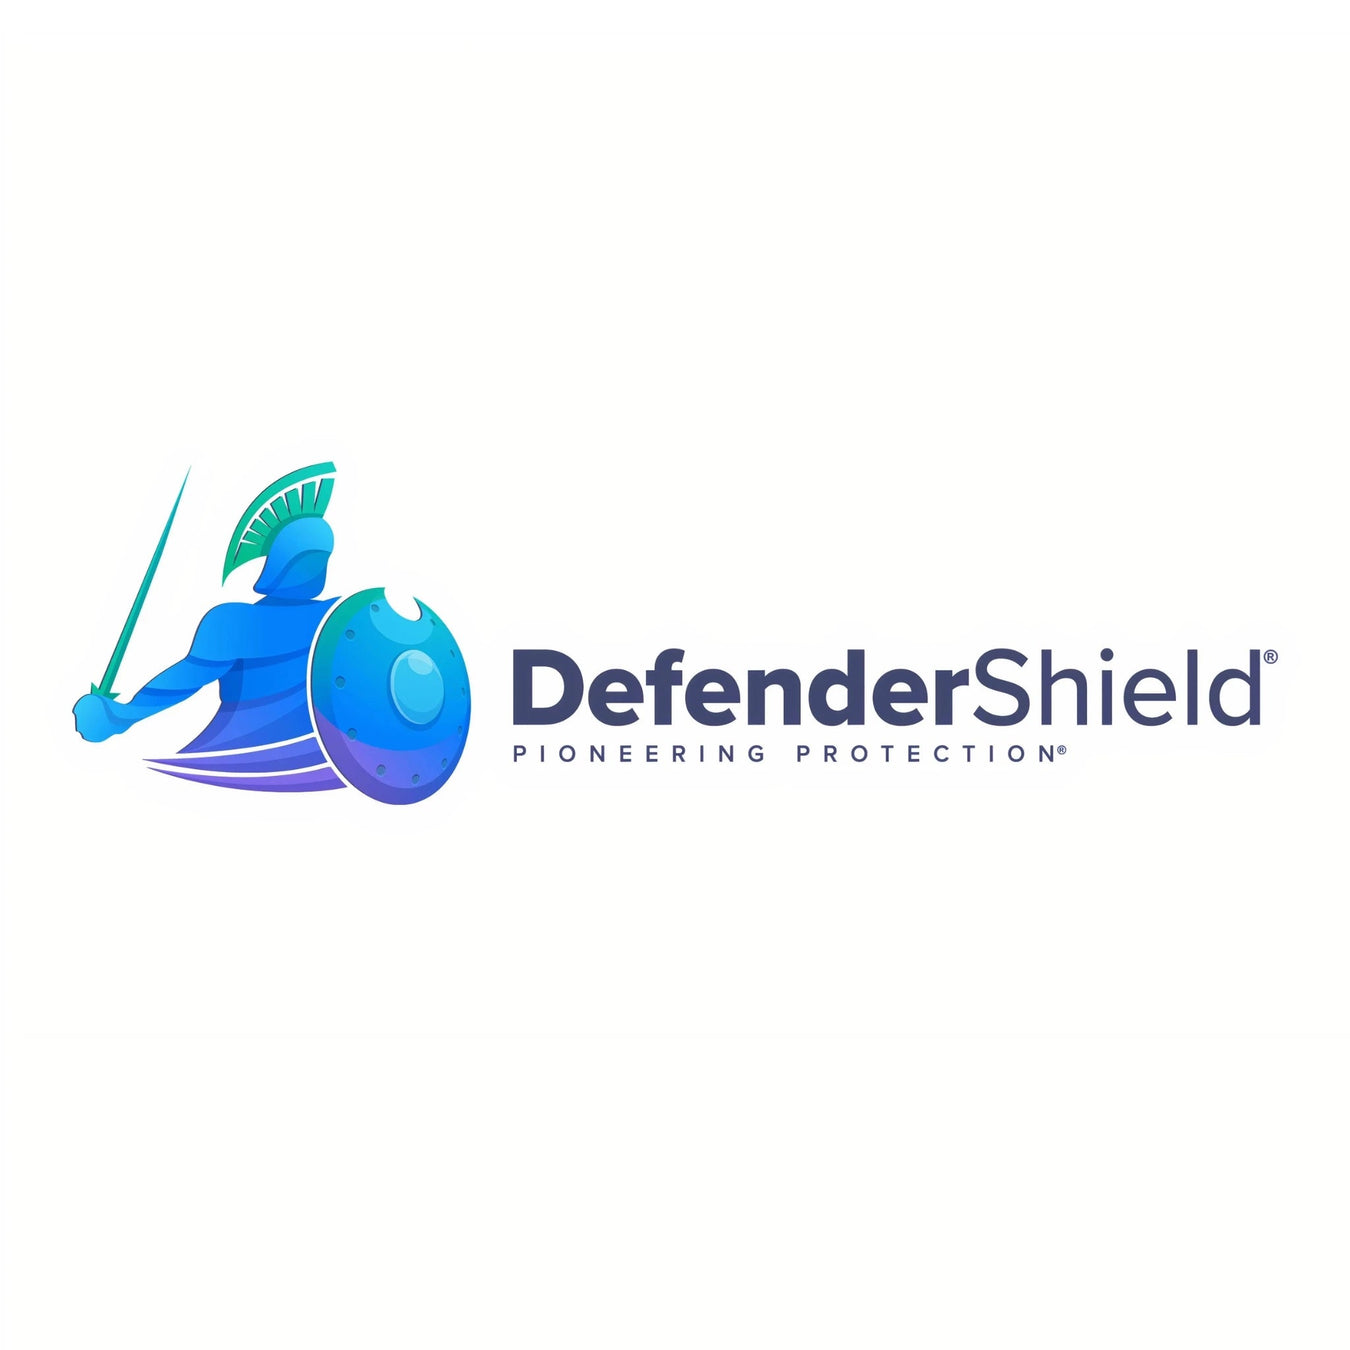 DefenderShield brand logo